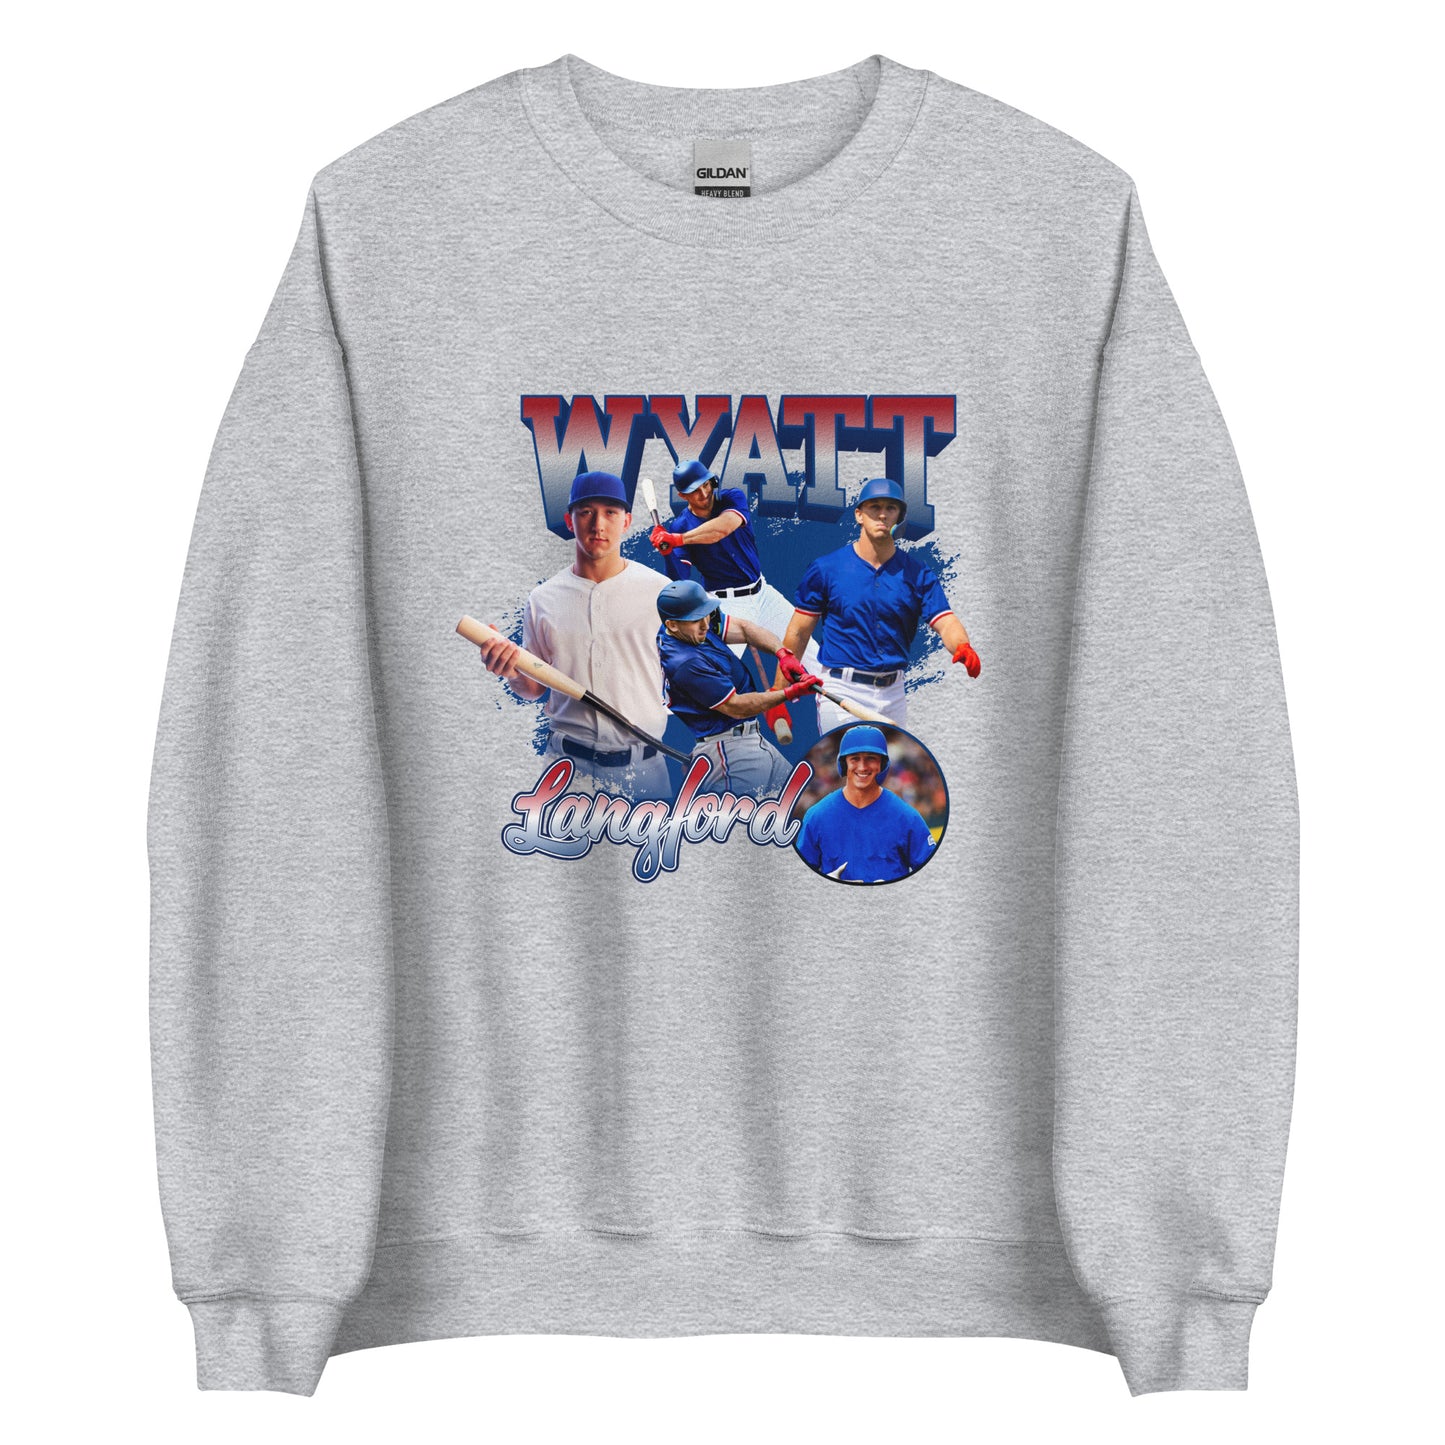 Wyatt Langford "Vintage" Sweatshirt - Fan Arch